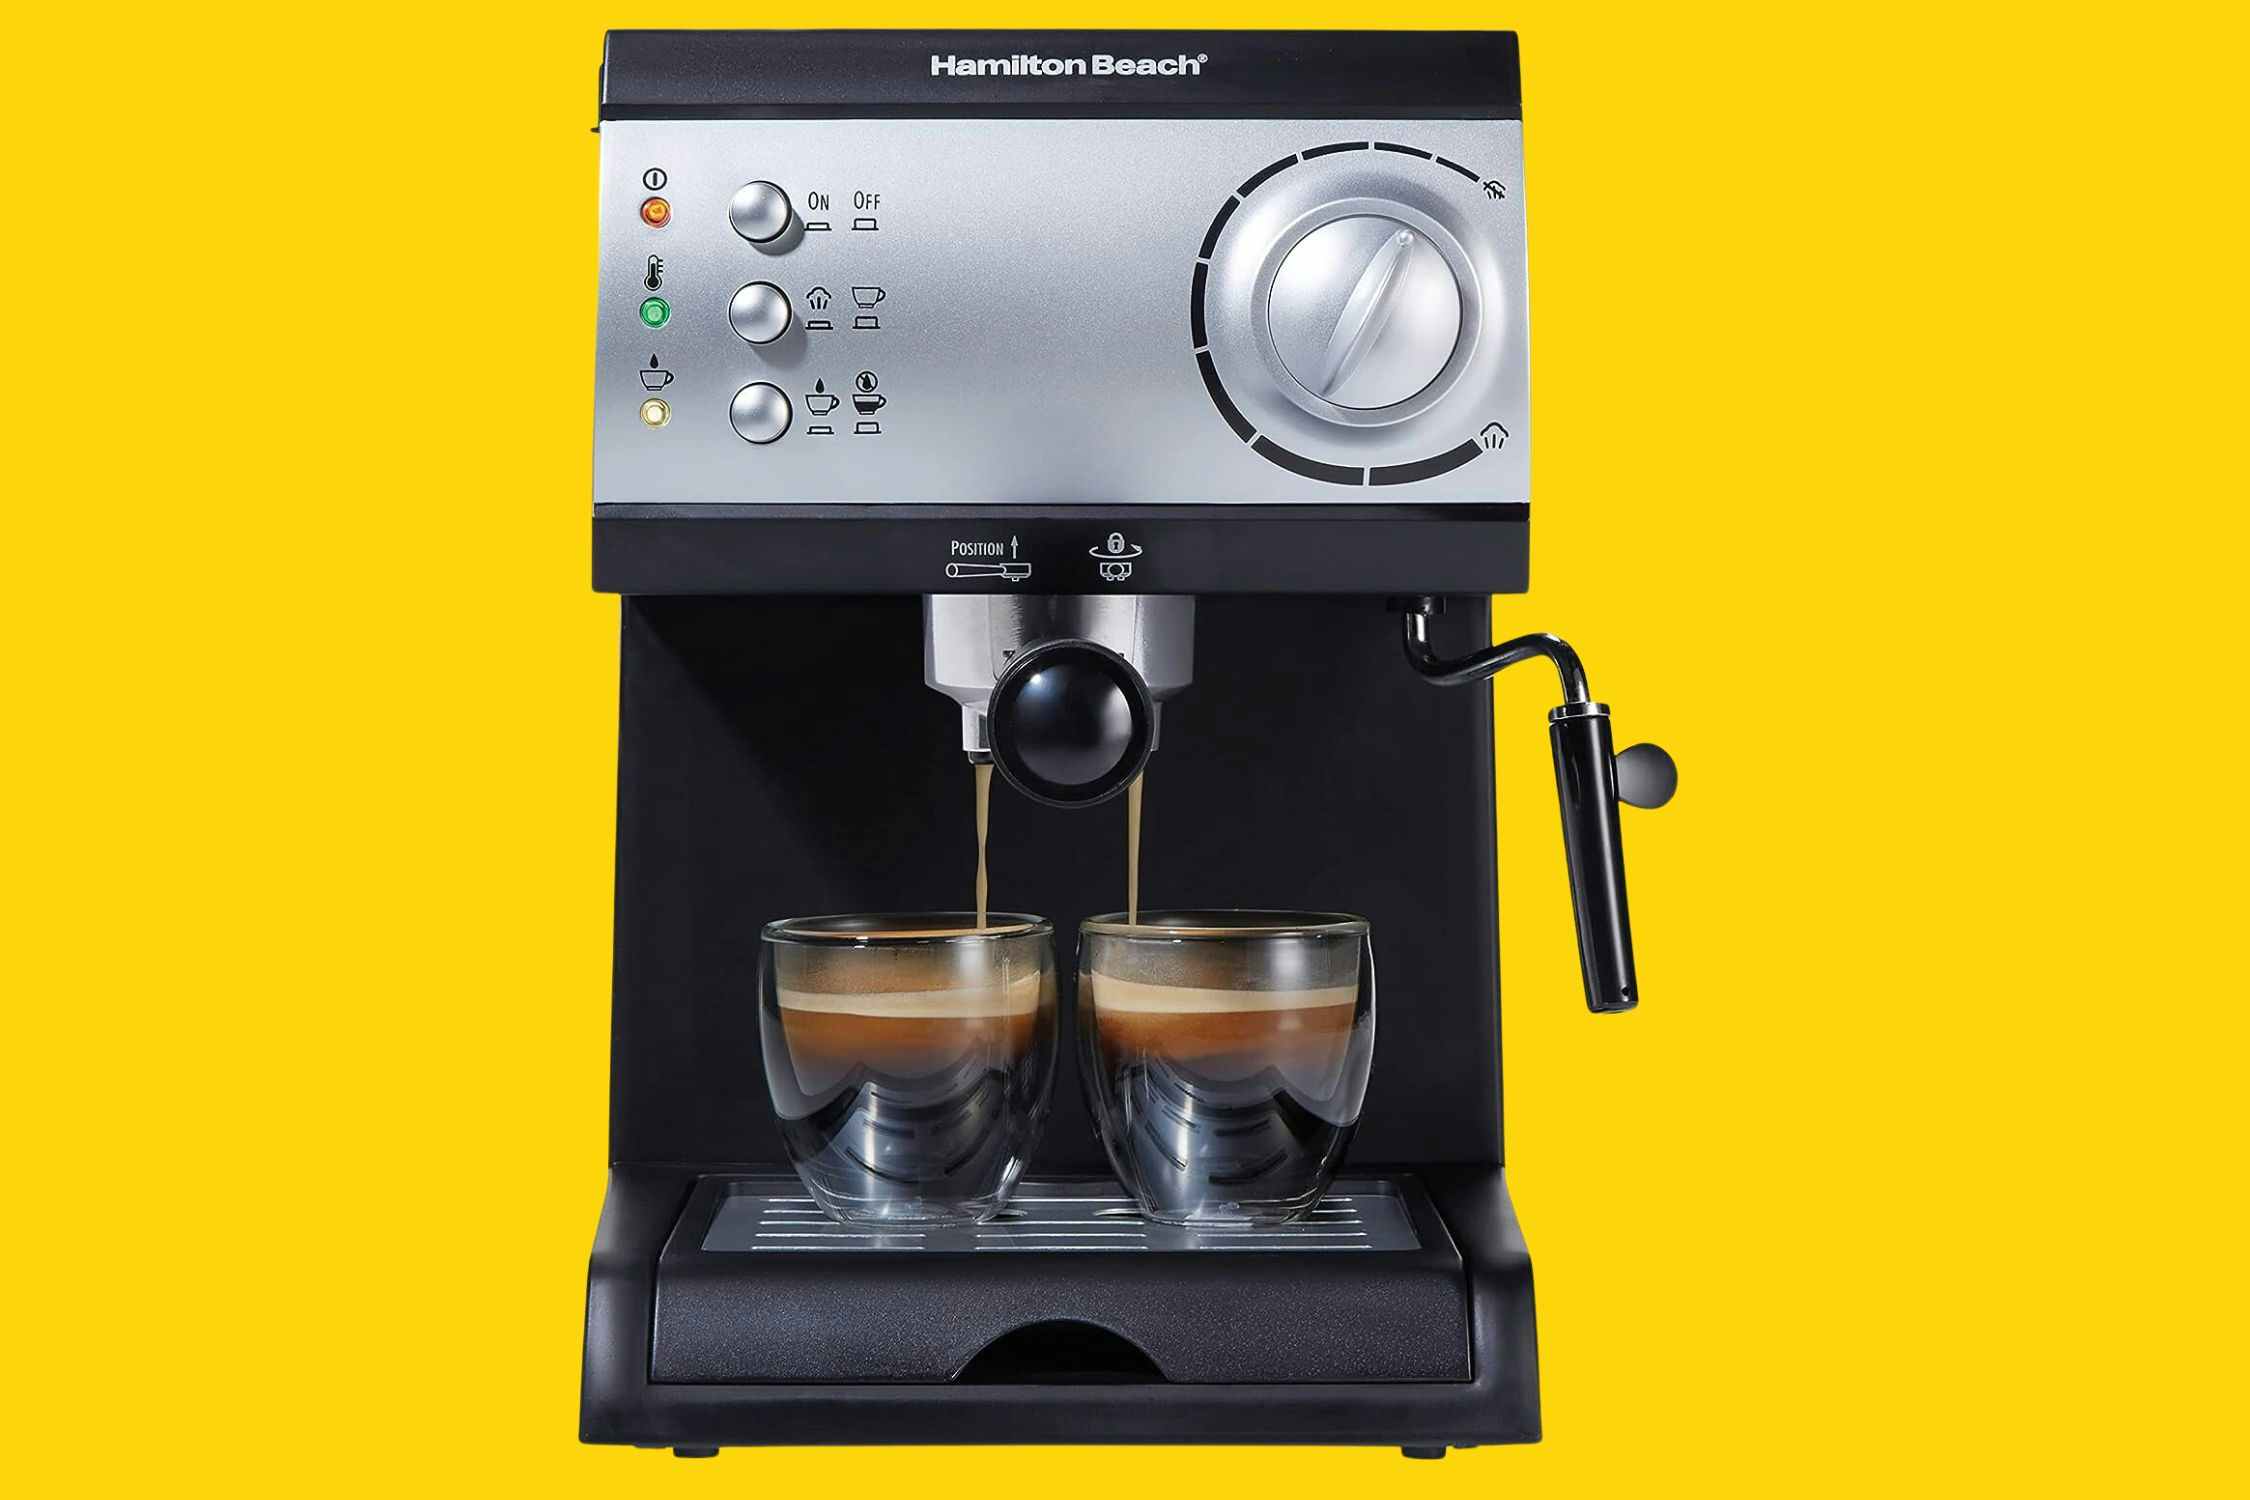 Hamilton Beach Espresso Machine, Just $75 on Amazon 